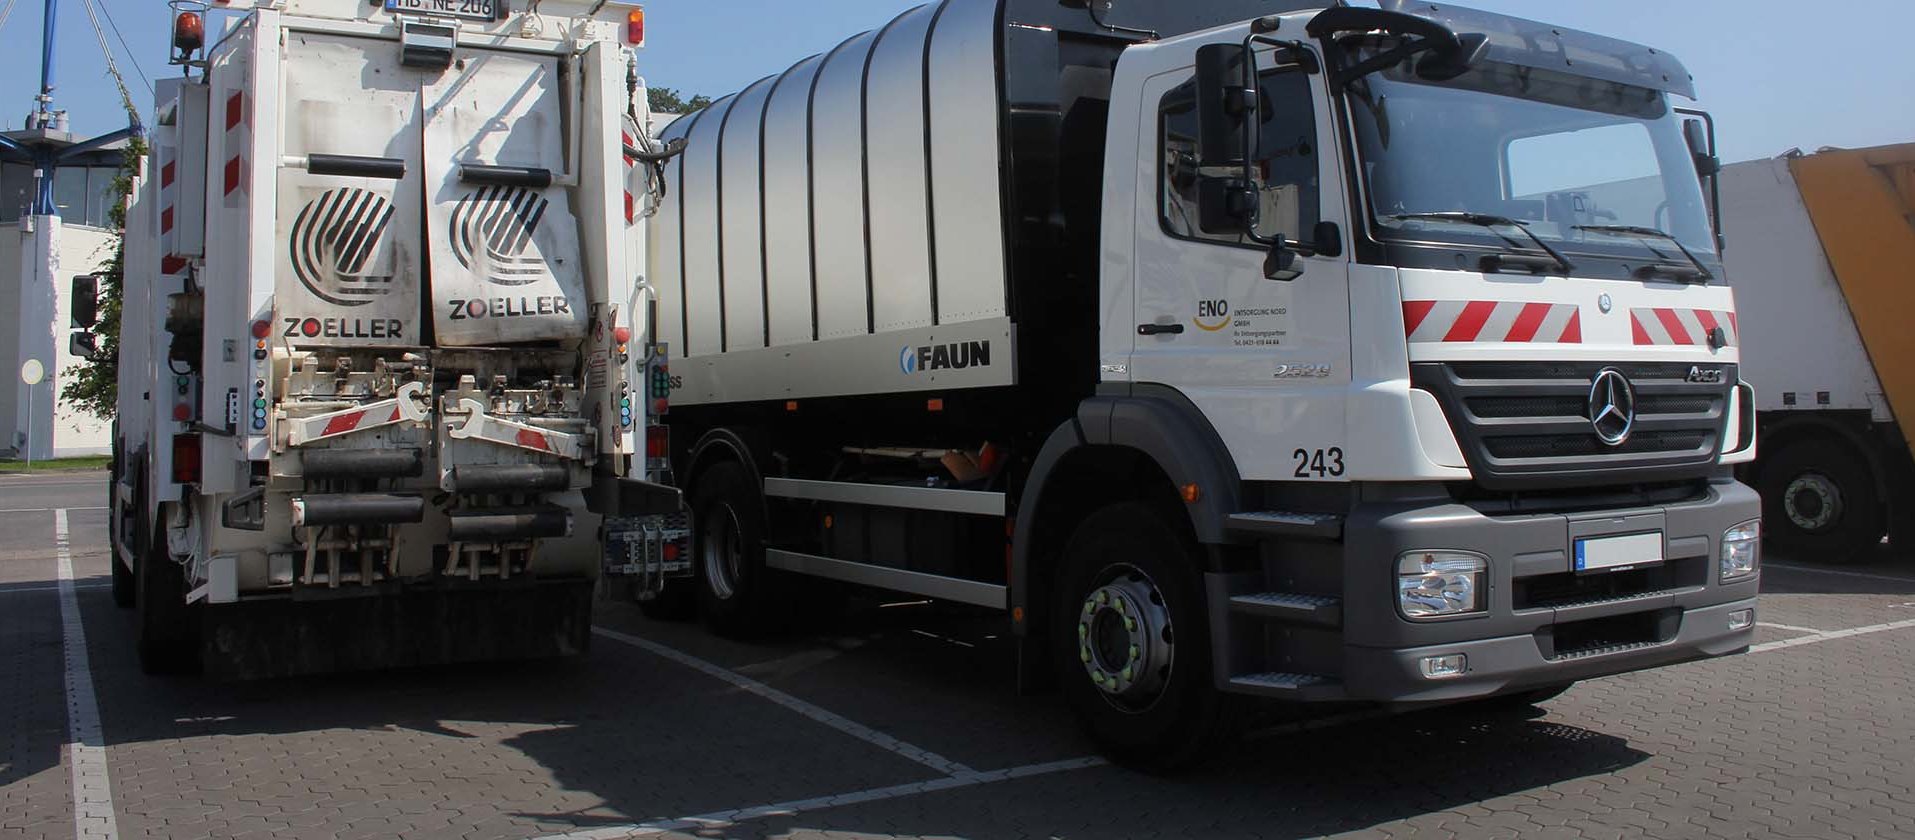 Rubbish truck from Bremer waste management